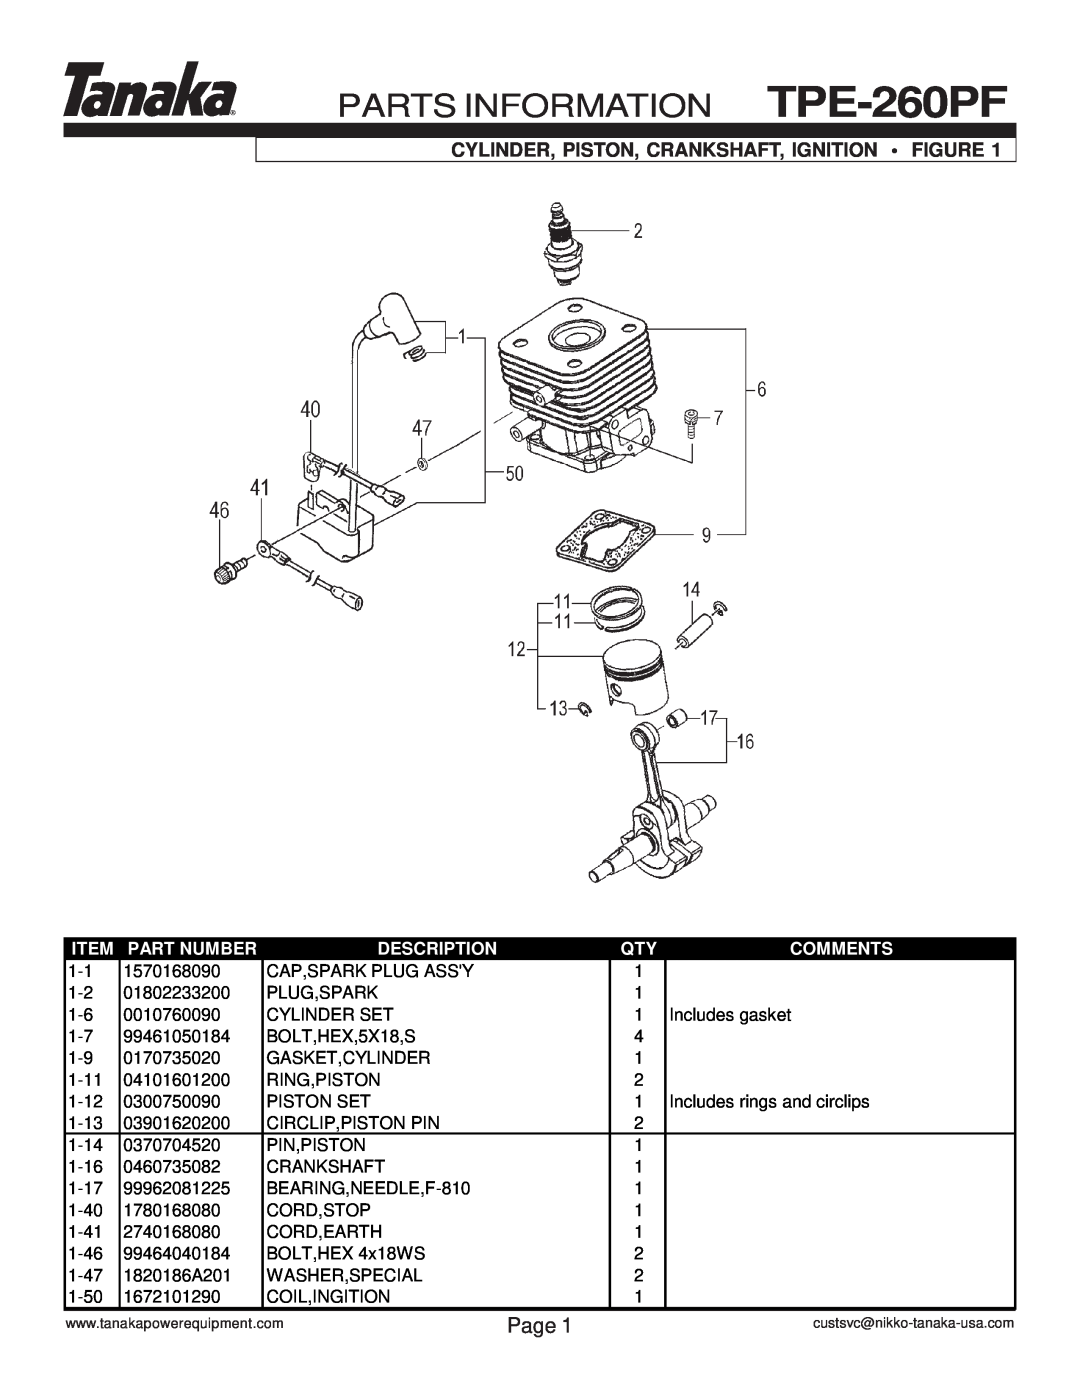 Tanaka manual PARTS INFORMATION TPE-260PF, Cylinder, Piston, Crankshaft, Ignition Figure, Page, Part Number, Description 